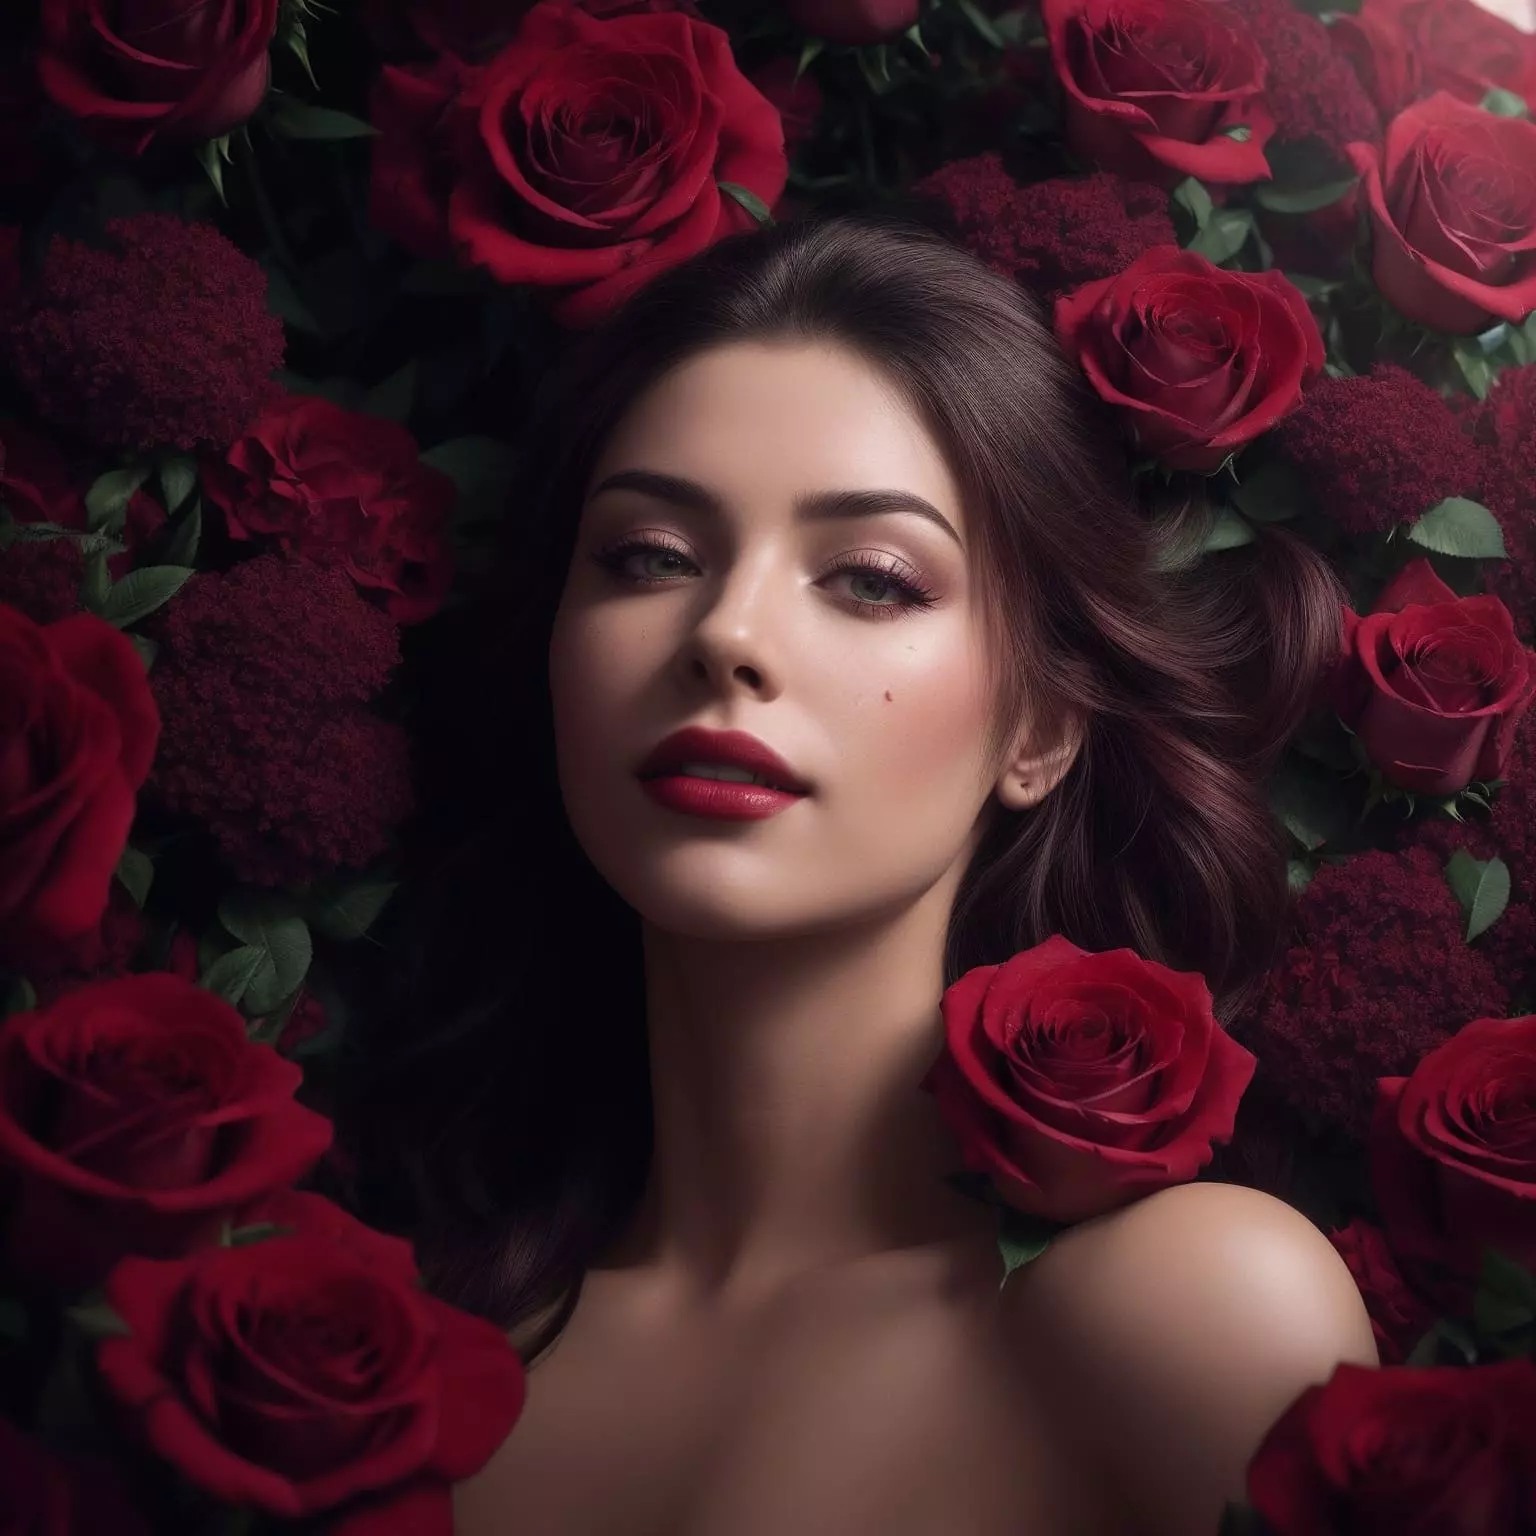 Woman among roses